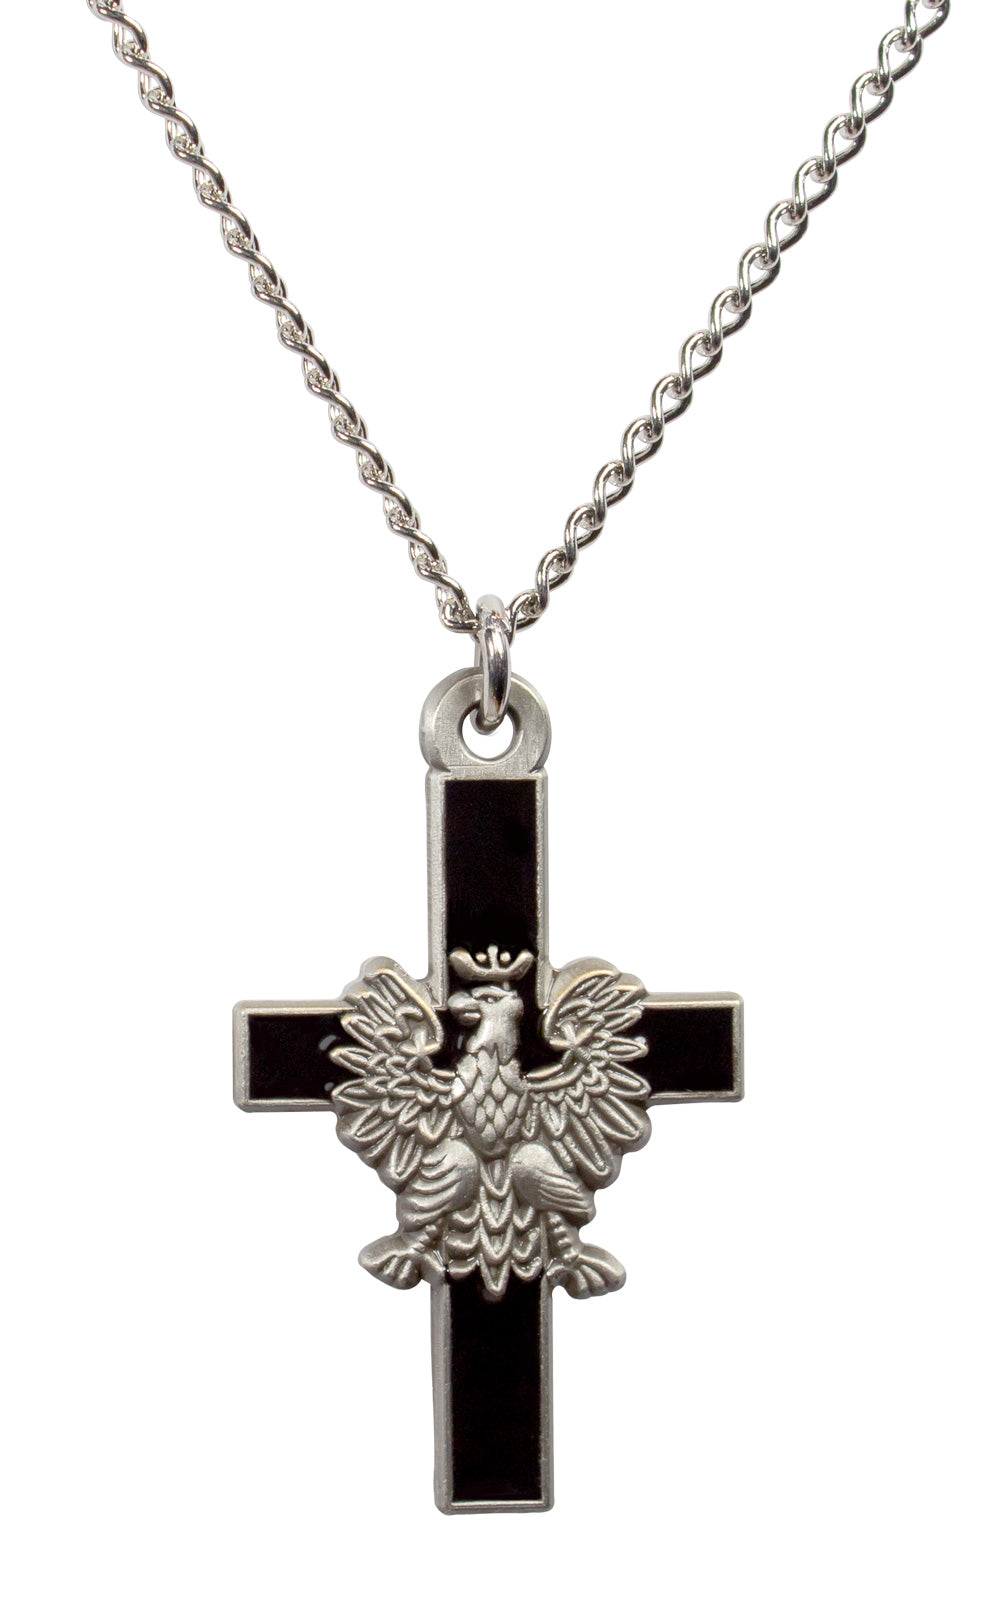 Necklace - Antique Silver White Eagle Cross, Black